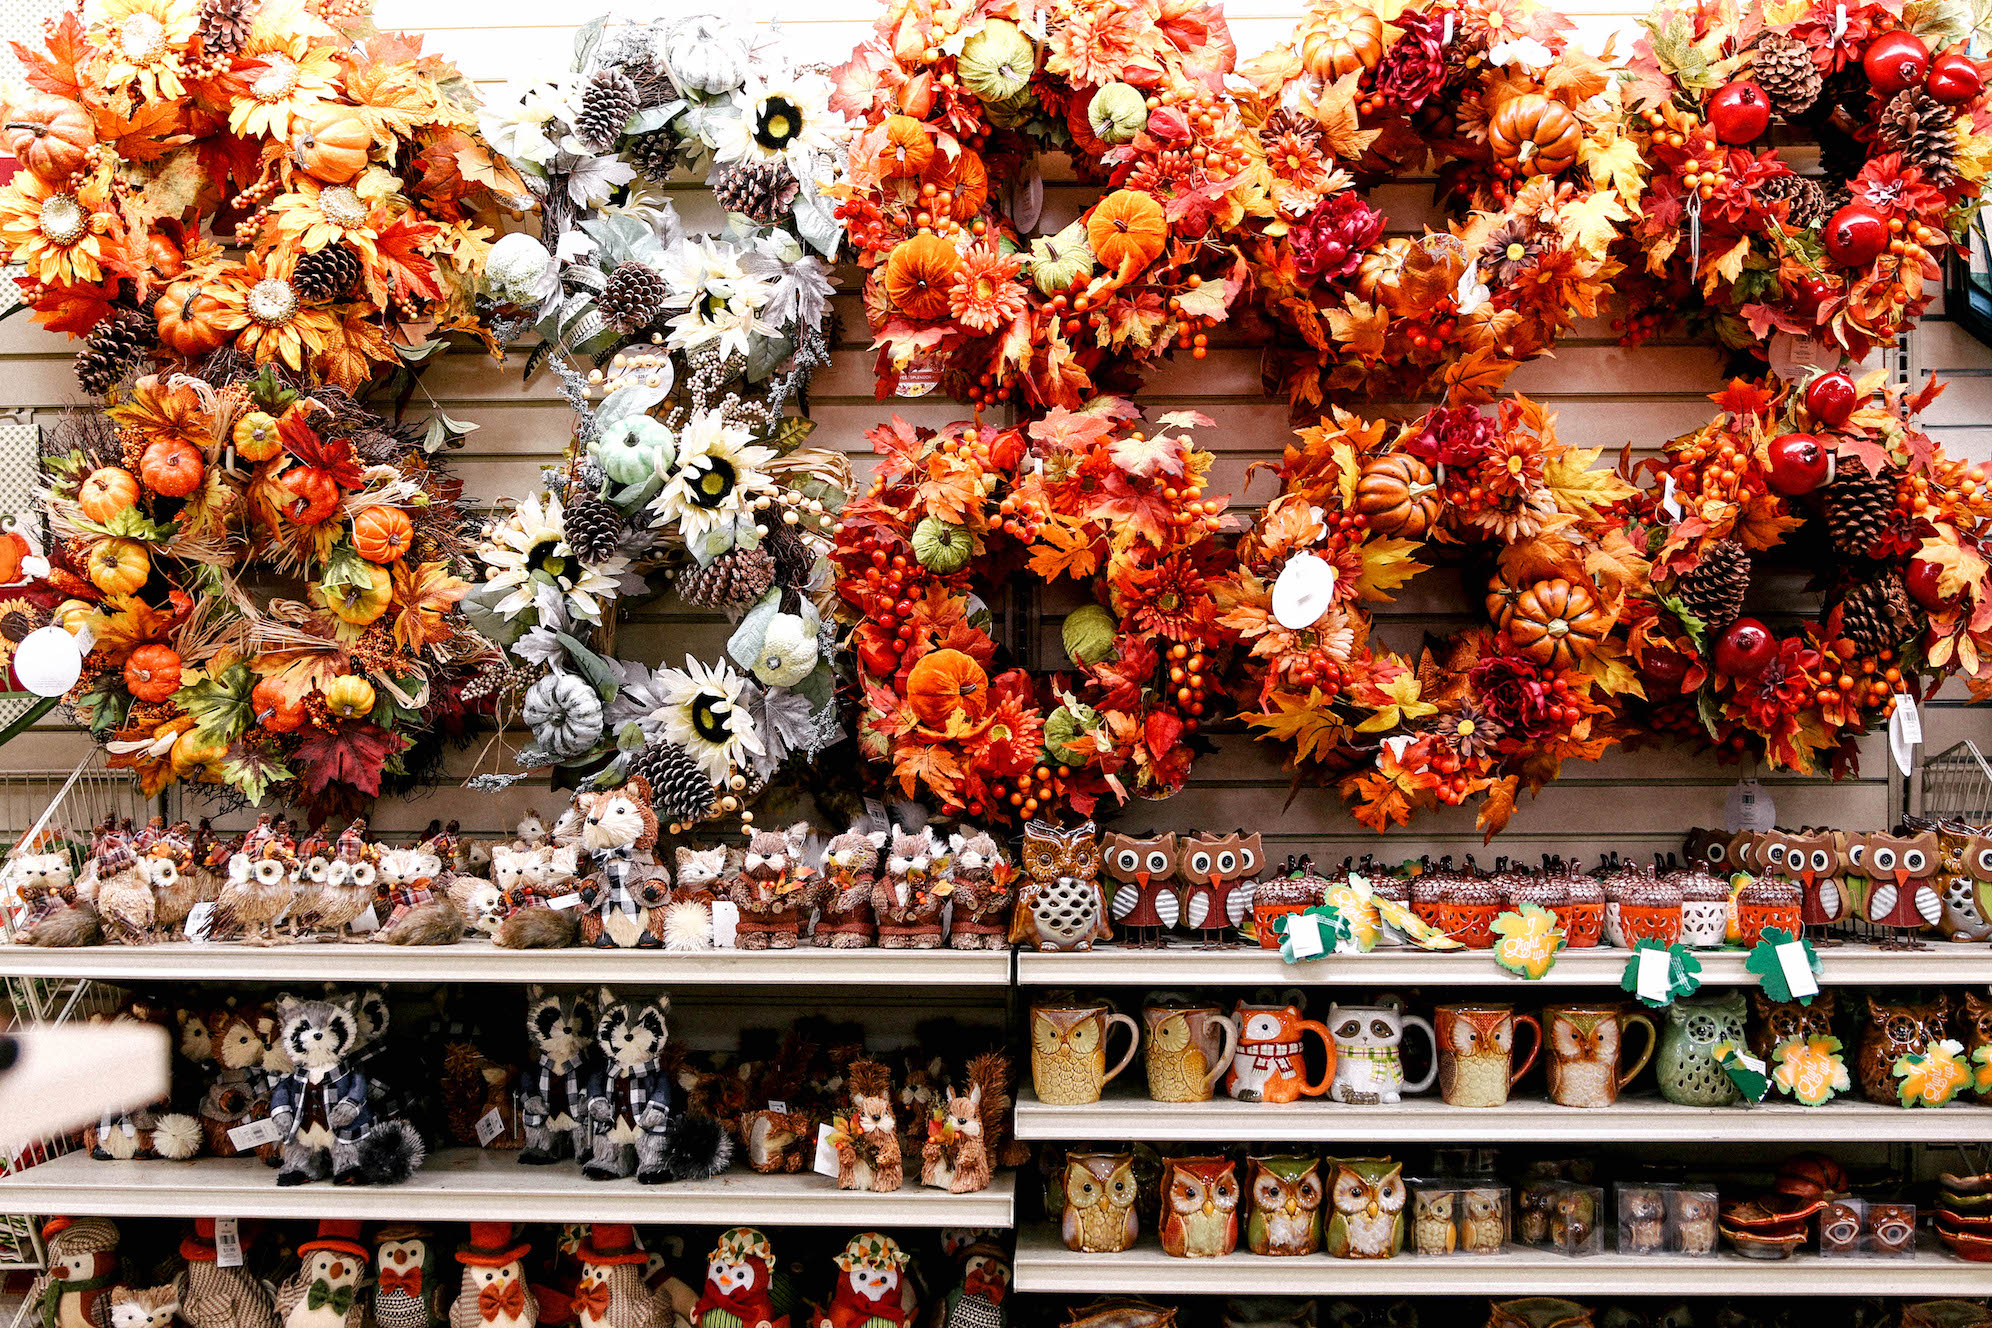 Autumn Decor At Christmas Tree Shops Aubrey Yandow The Coastal Confidence